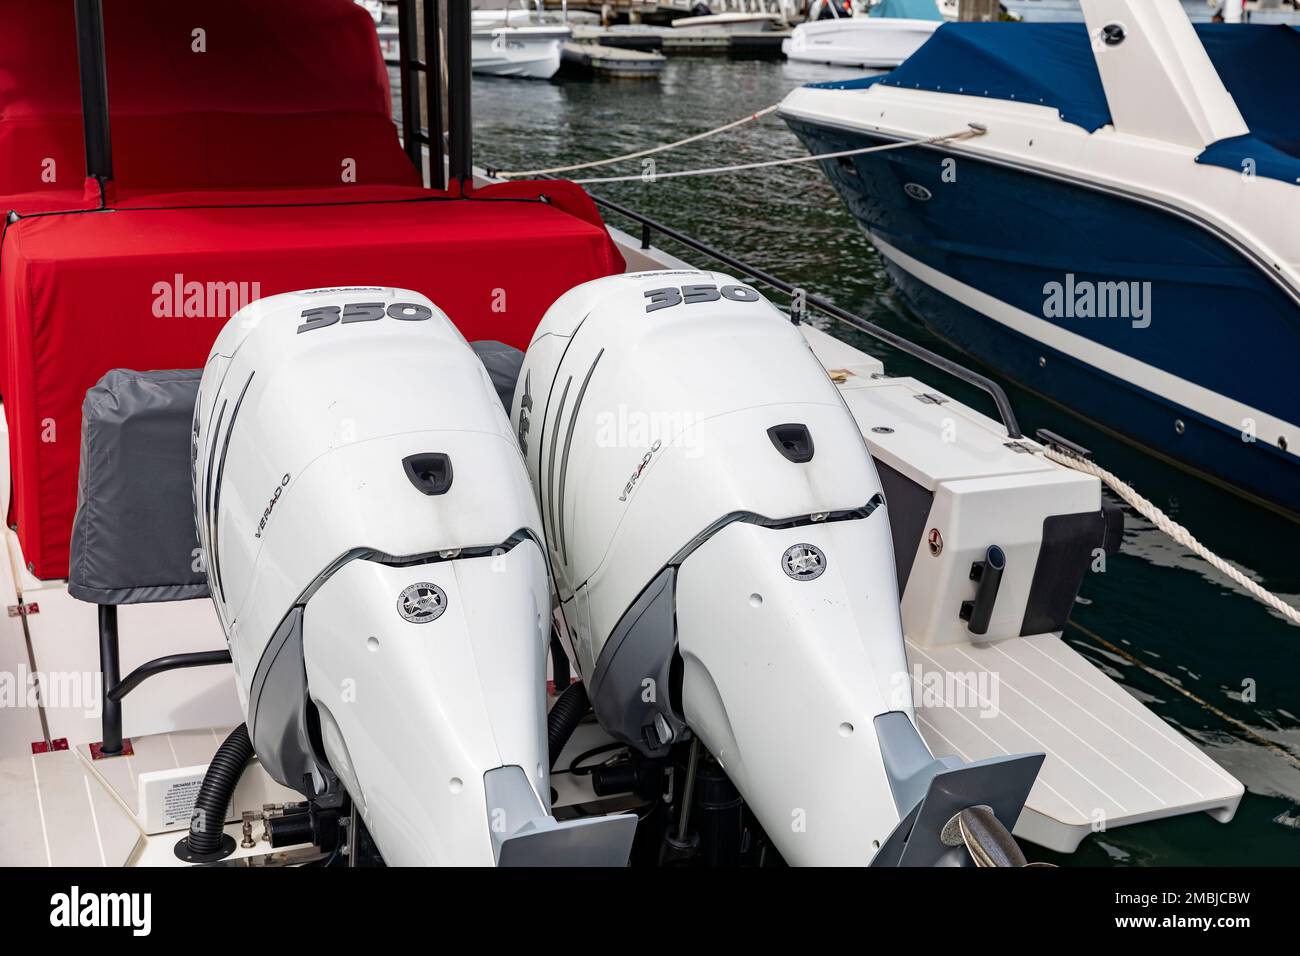 Twin Mercury verado 350 outboard engines motors mounted on a motorboat , Church Point,Sydney,NSW,Australia Stock Photo